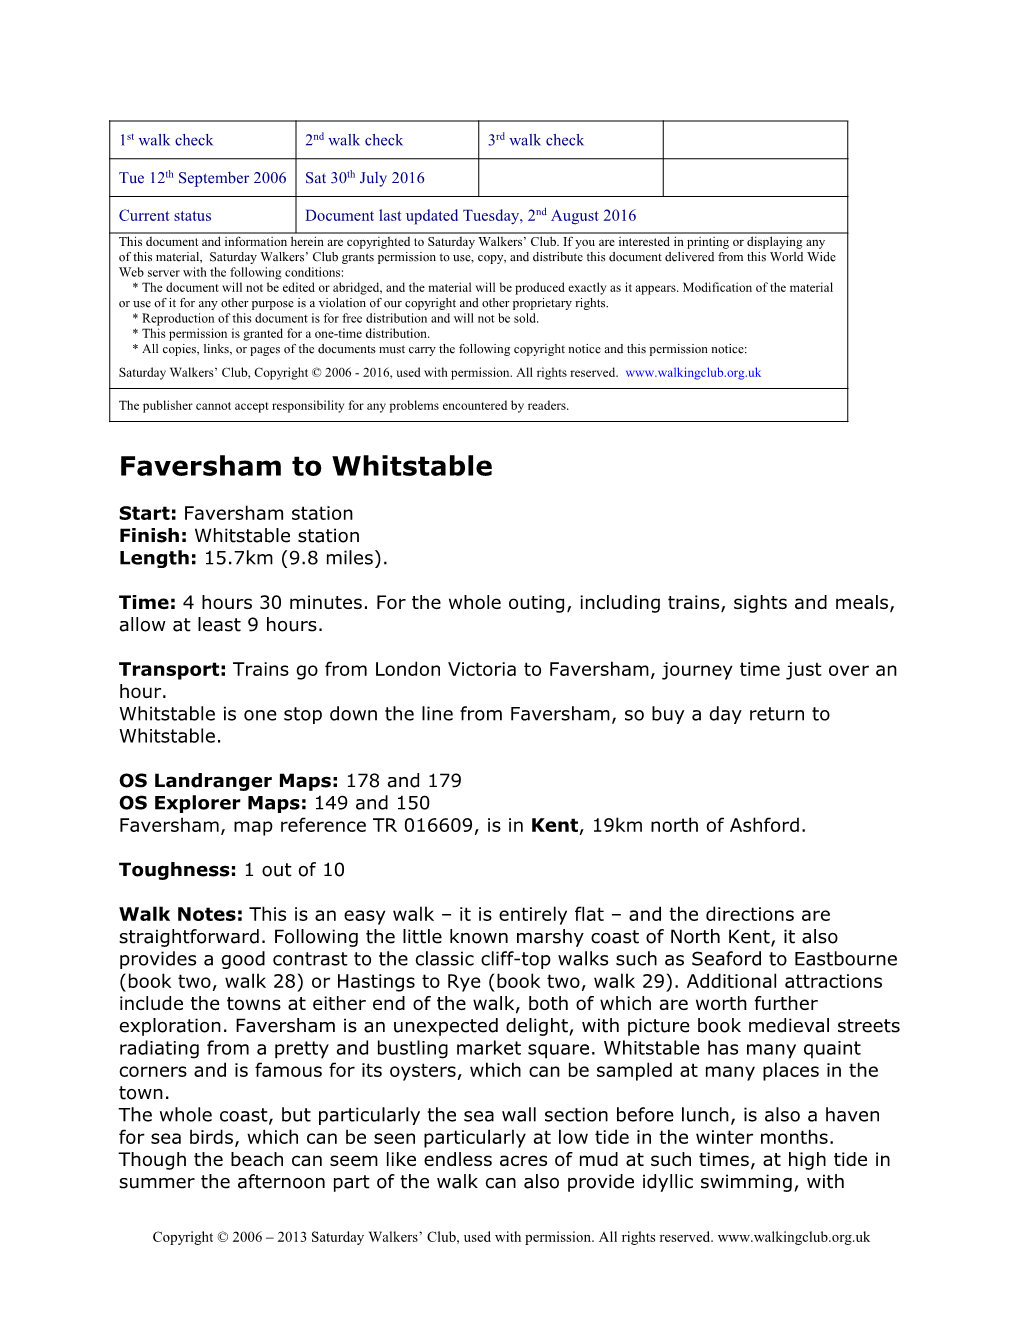 Faversham to Whitstable